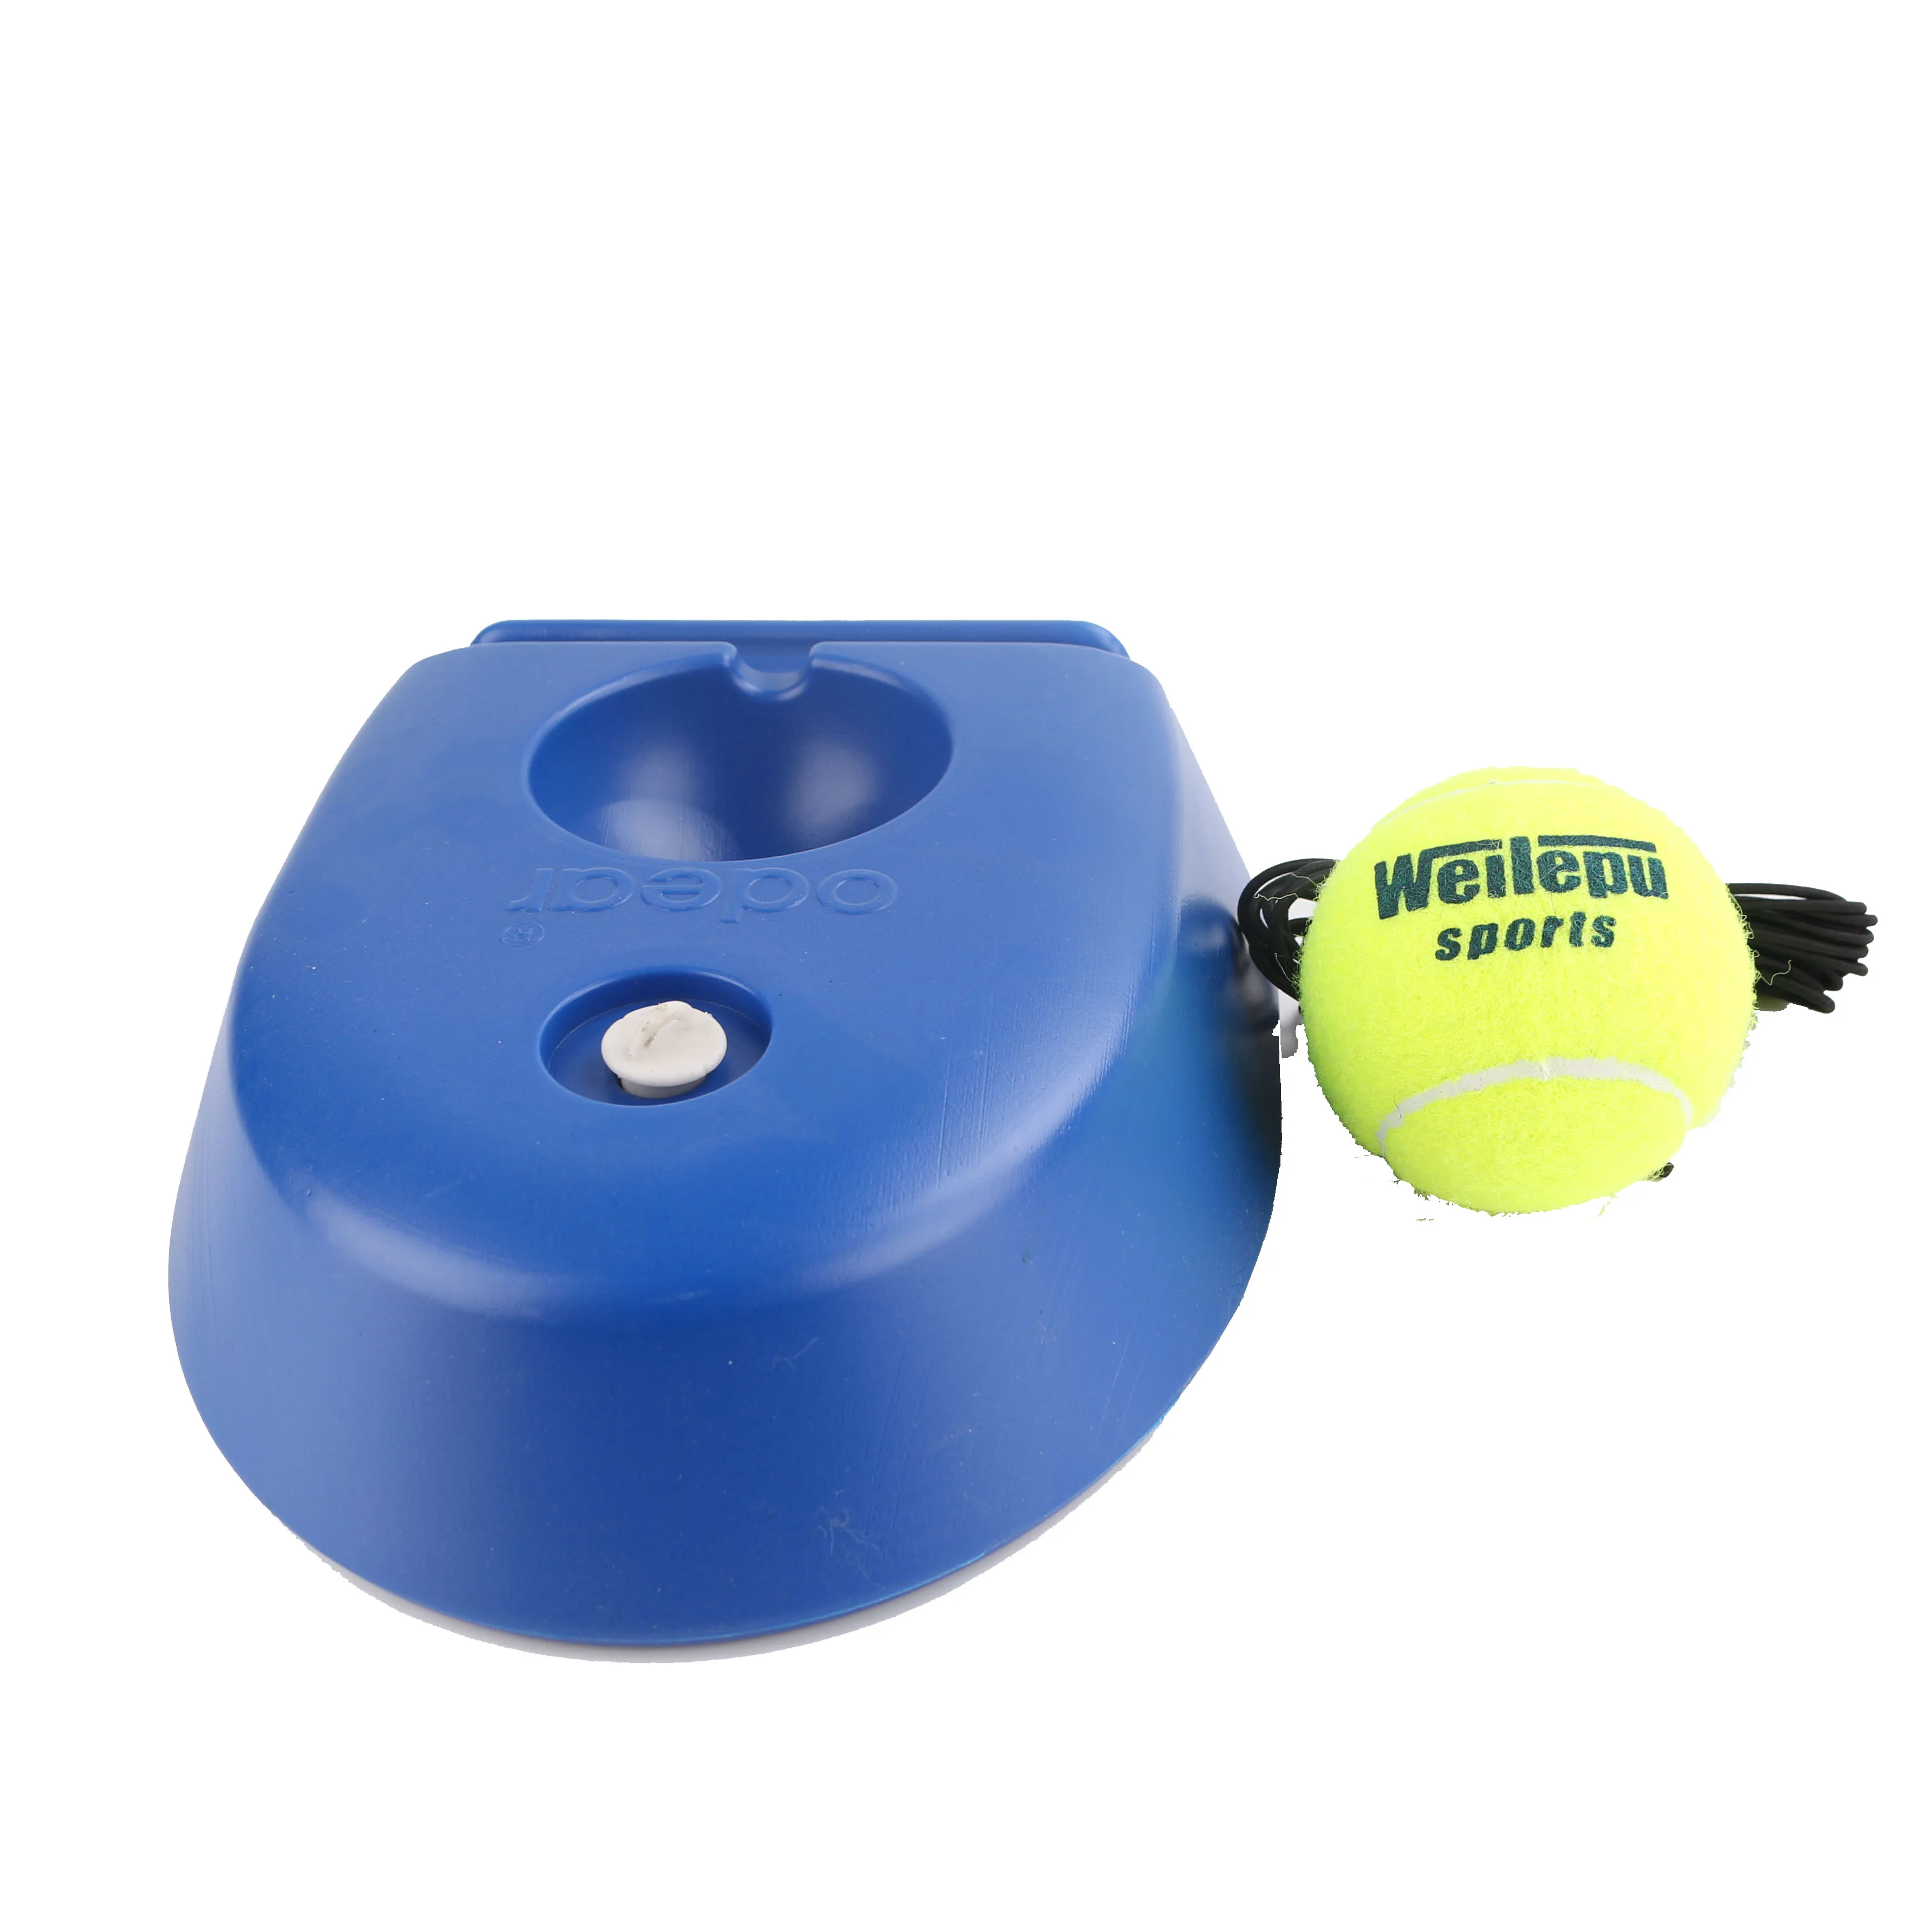 tennis ball throwing machine